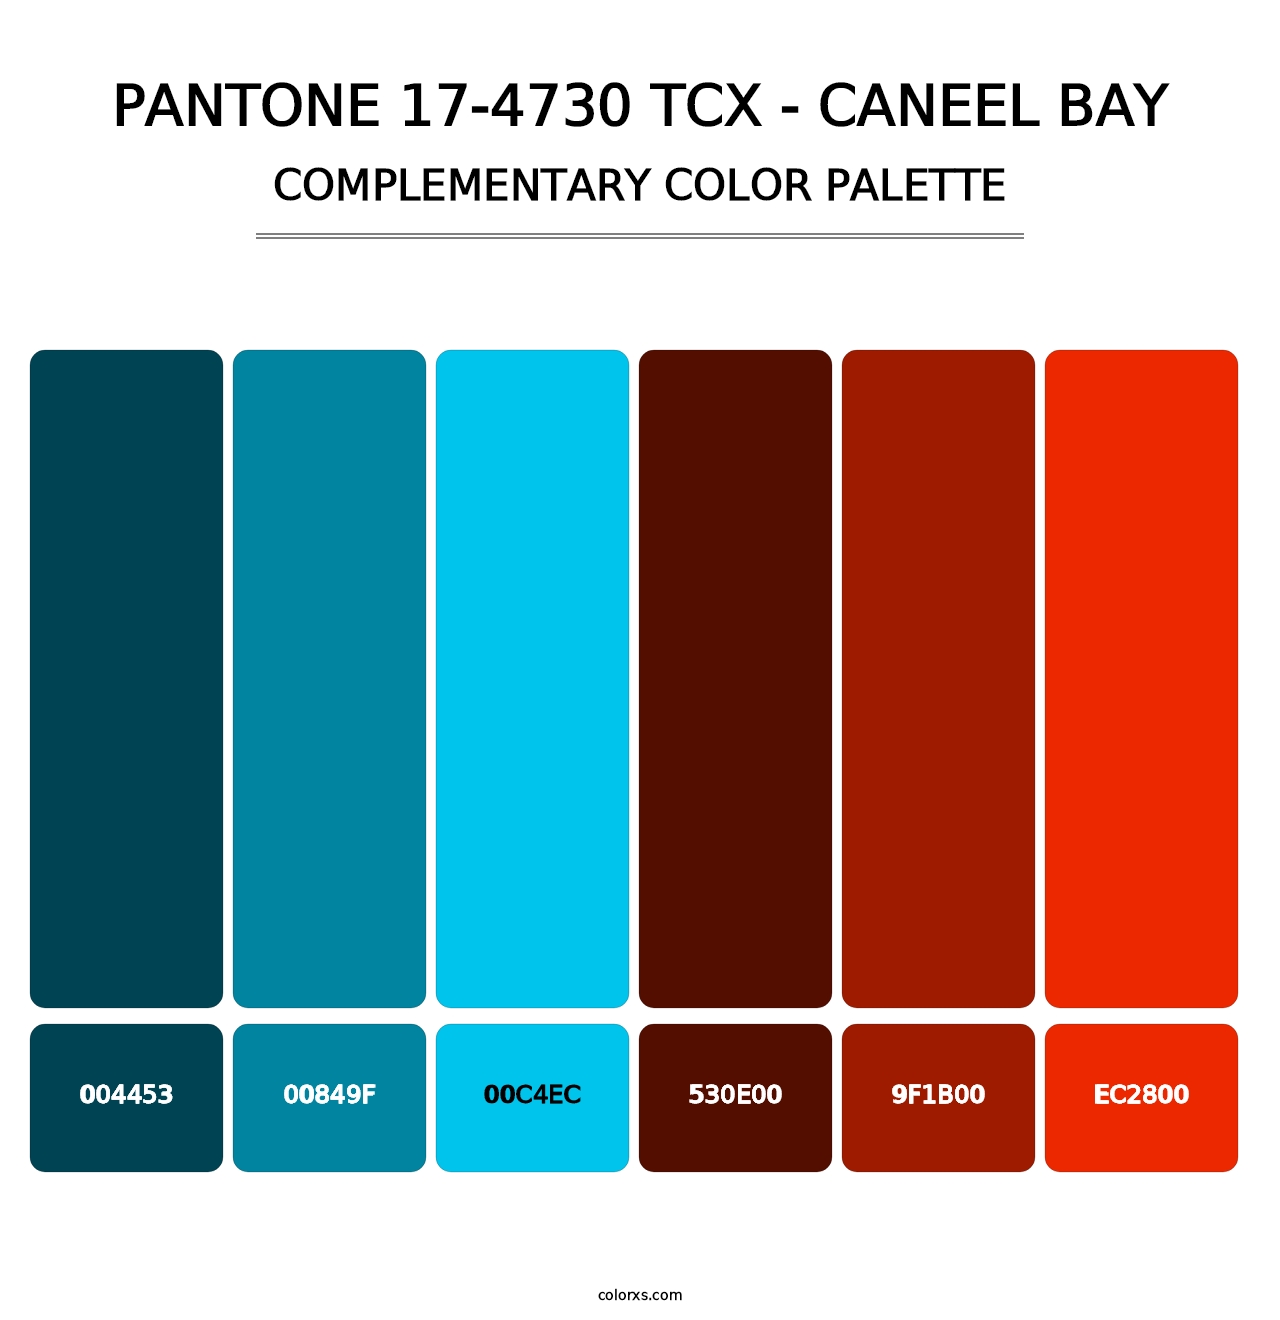 PANTONE 17-4730 TCX - Caneel Bay - Complementary Color Palette